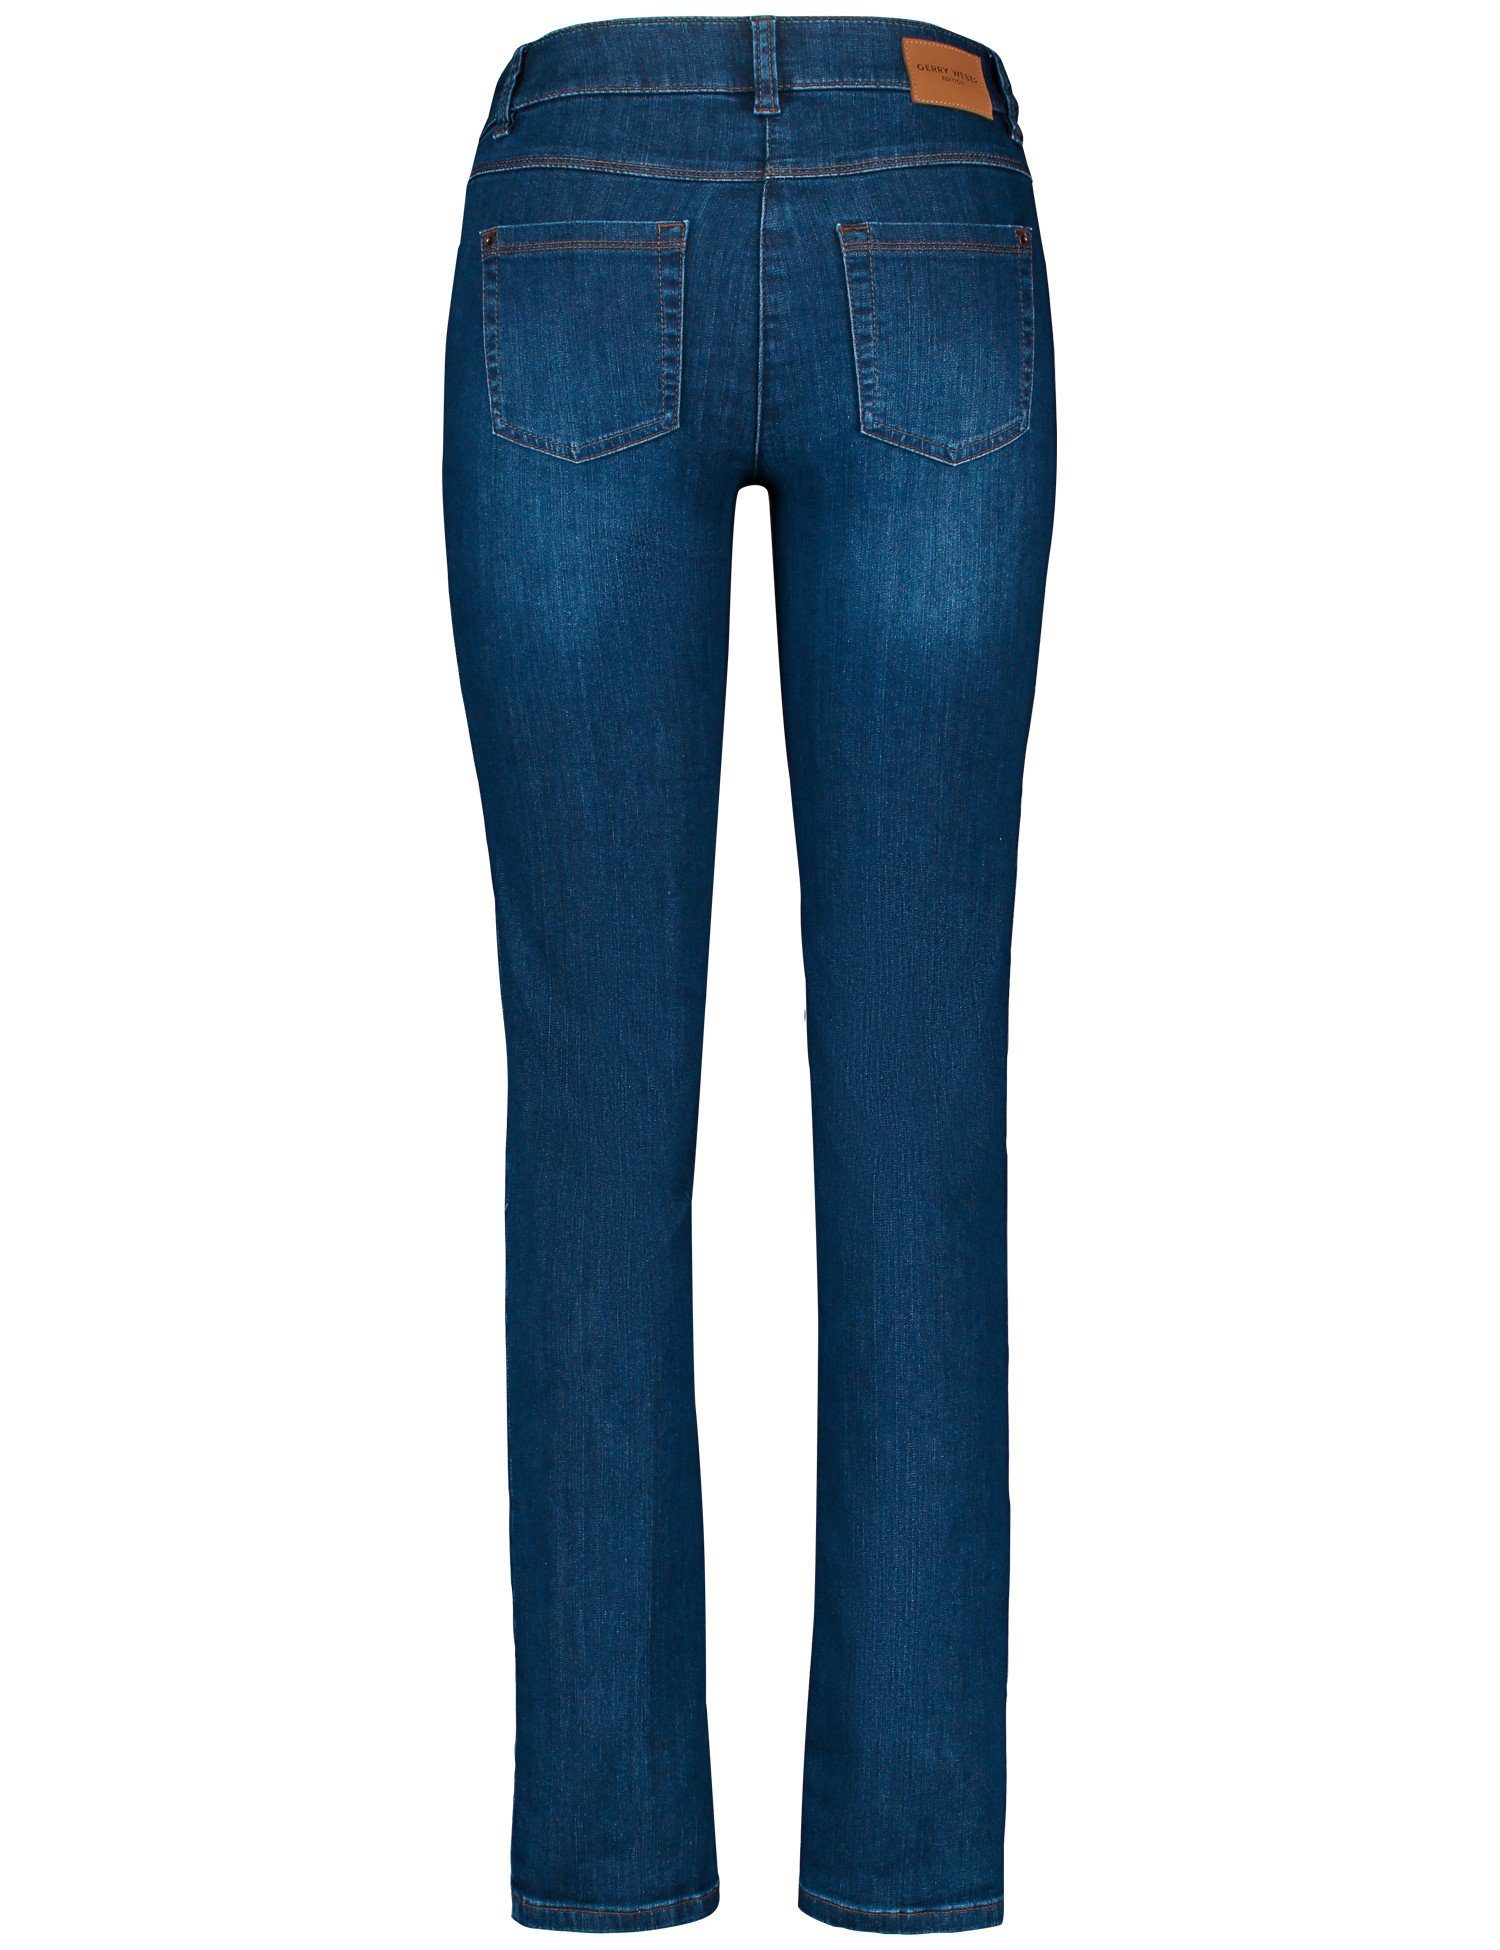 Jeans 5-Pocket WEBER Slimfit Best4me dark blue use mit Stretch-Jeans denim GERRY